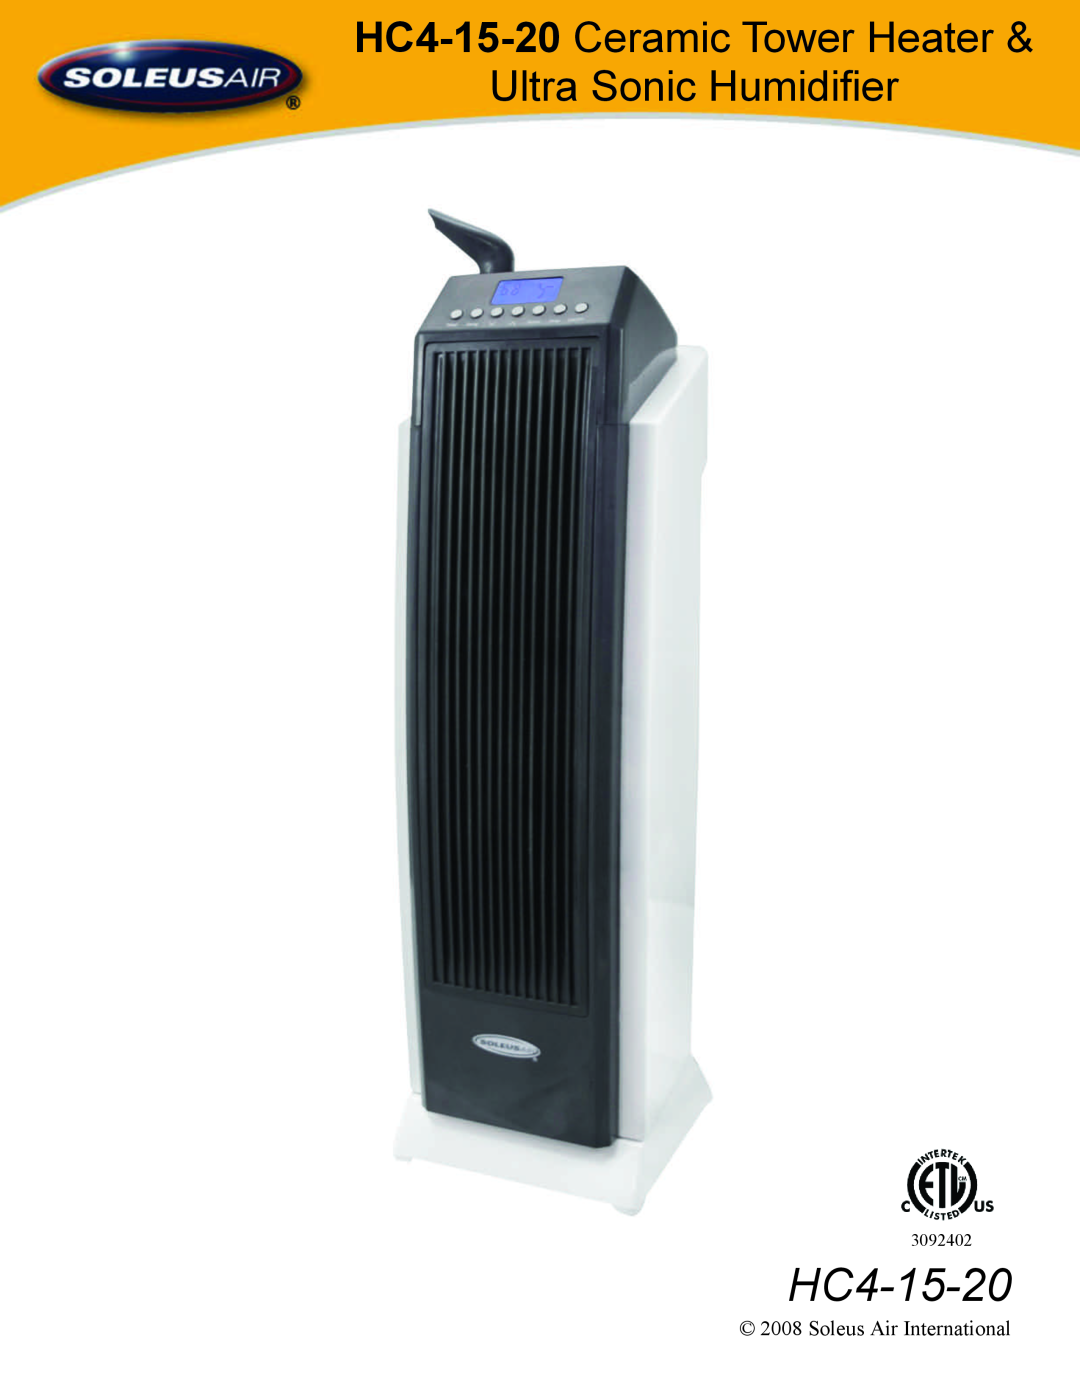 Soleus Air manual HC4-15-20 Ceramic Tower Heater, Ultra Sonic Humidifier 